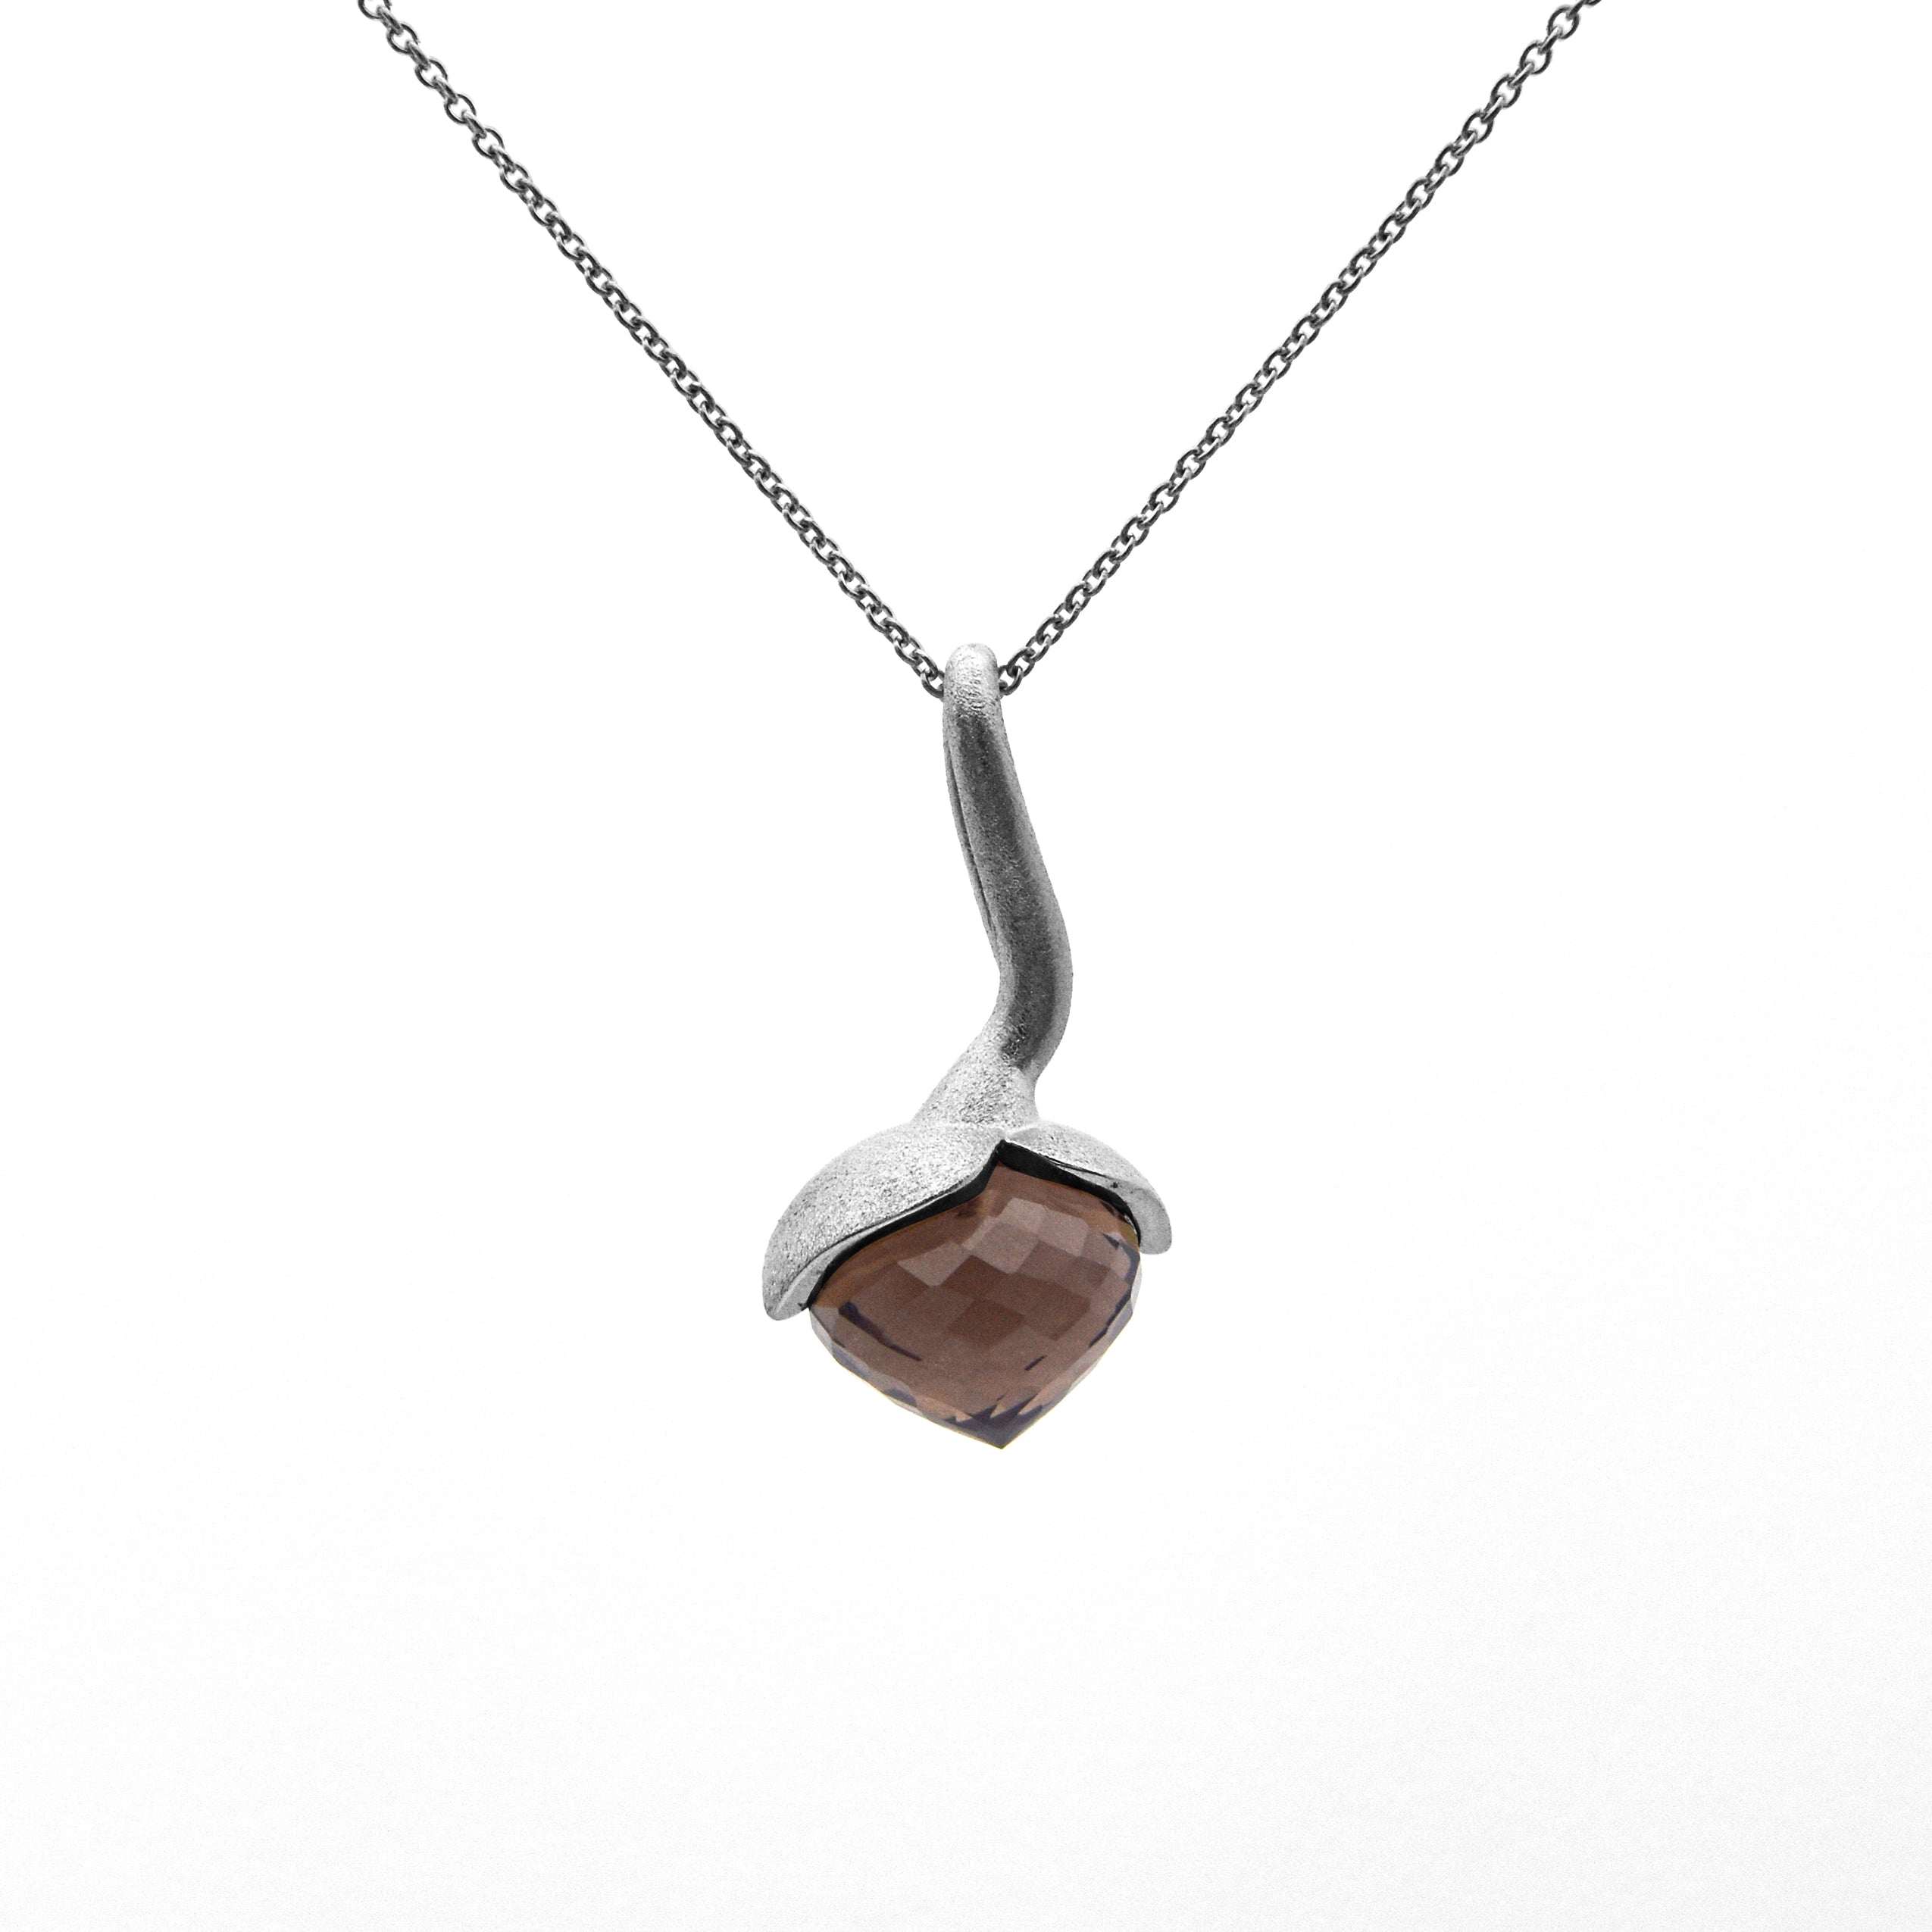 Dolce pendant "big" with smoky quartz 925/-